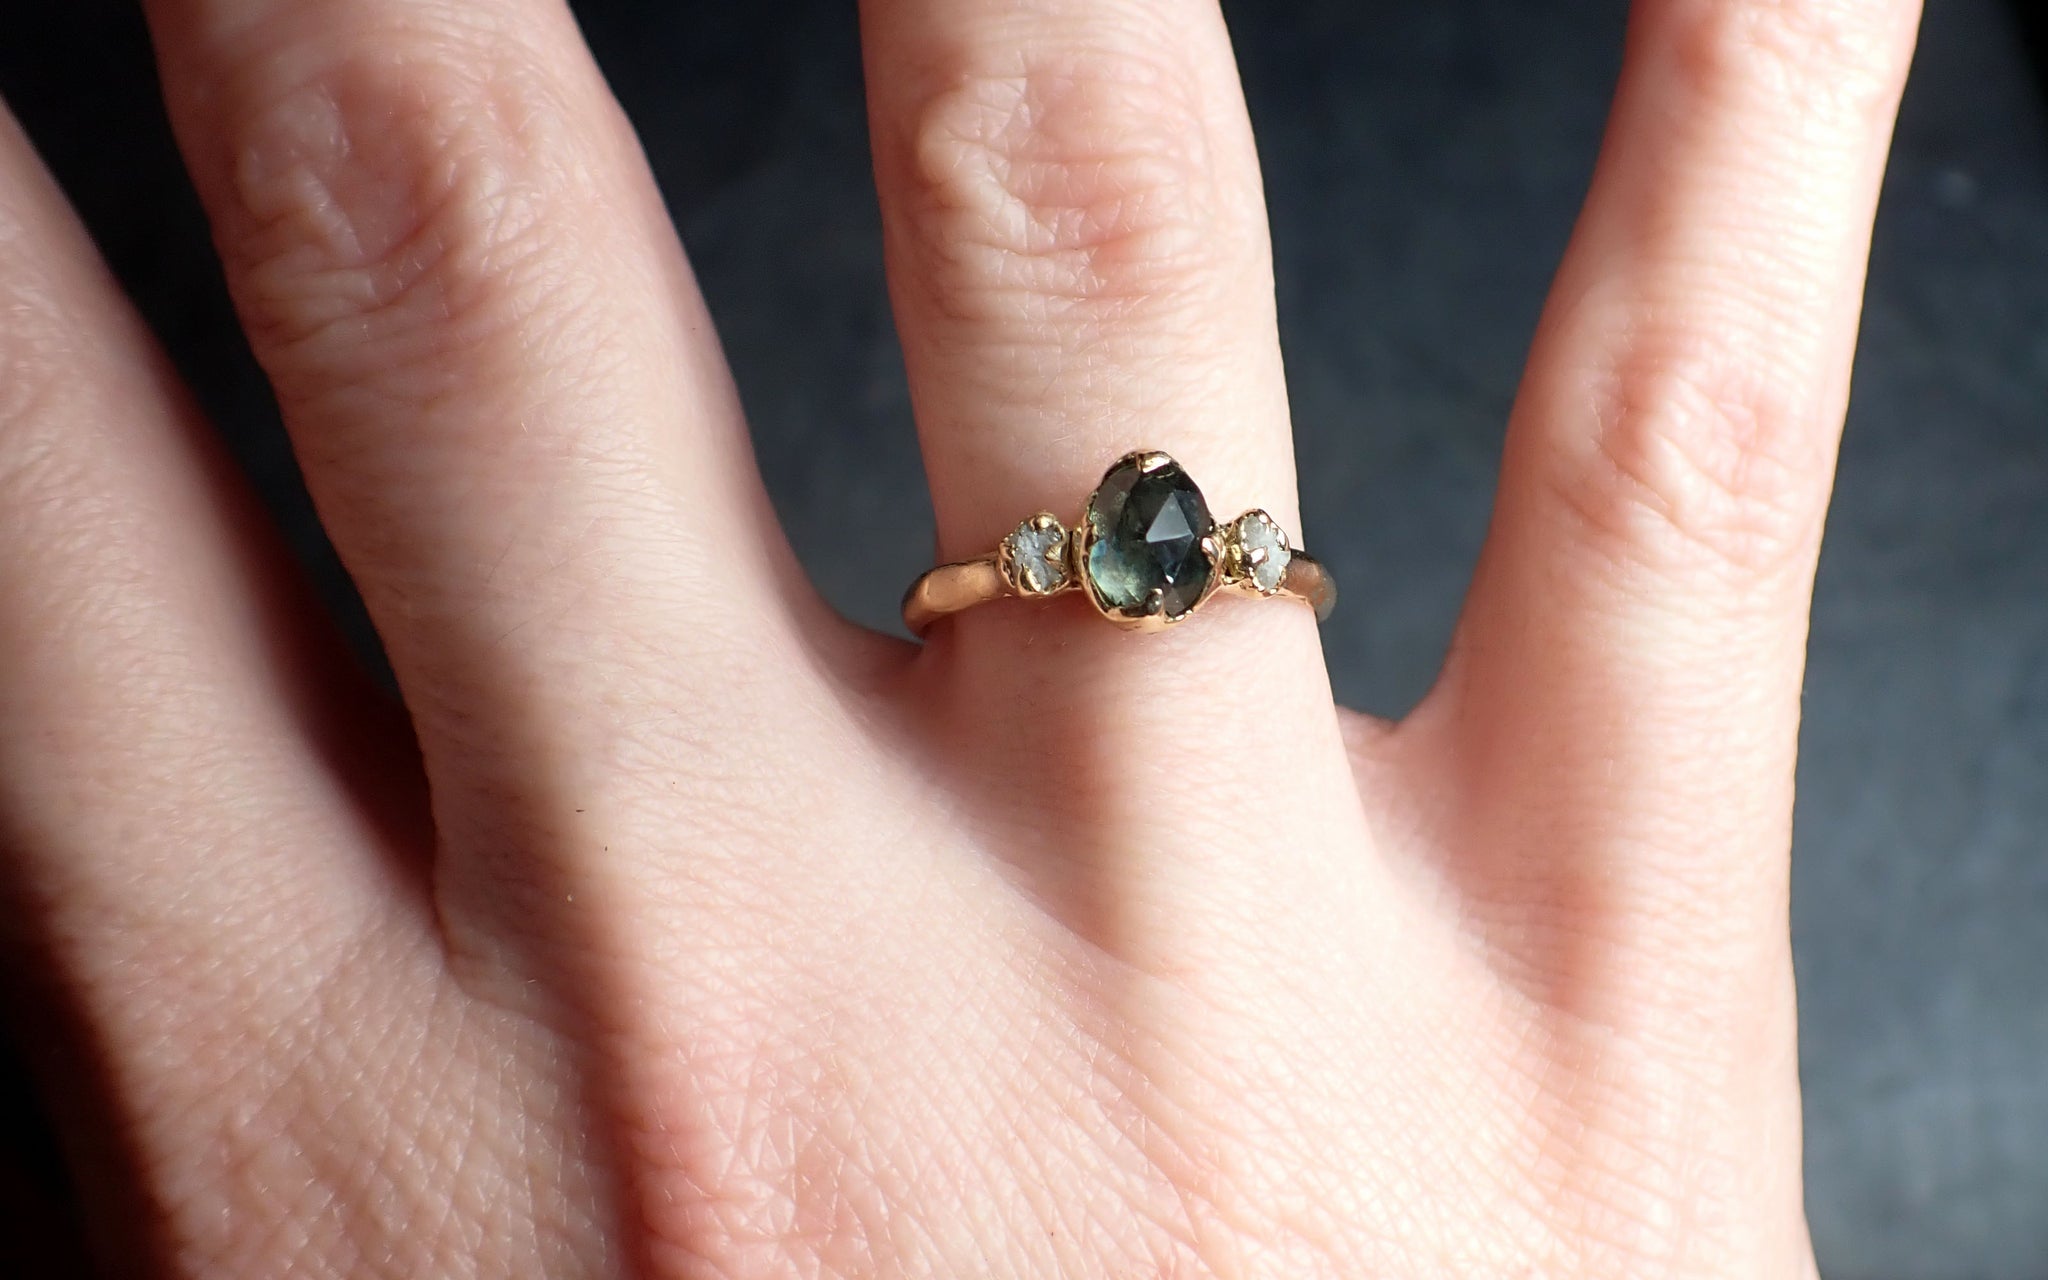 fancy cut montana sapphire diamond 14k yellow gold engagement ring wedding ring custom one of a kind blue gemstone ring multi stone ring 2370 Alternative Engagement